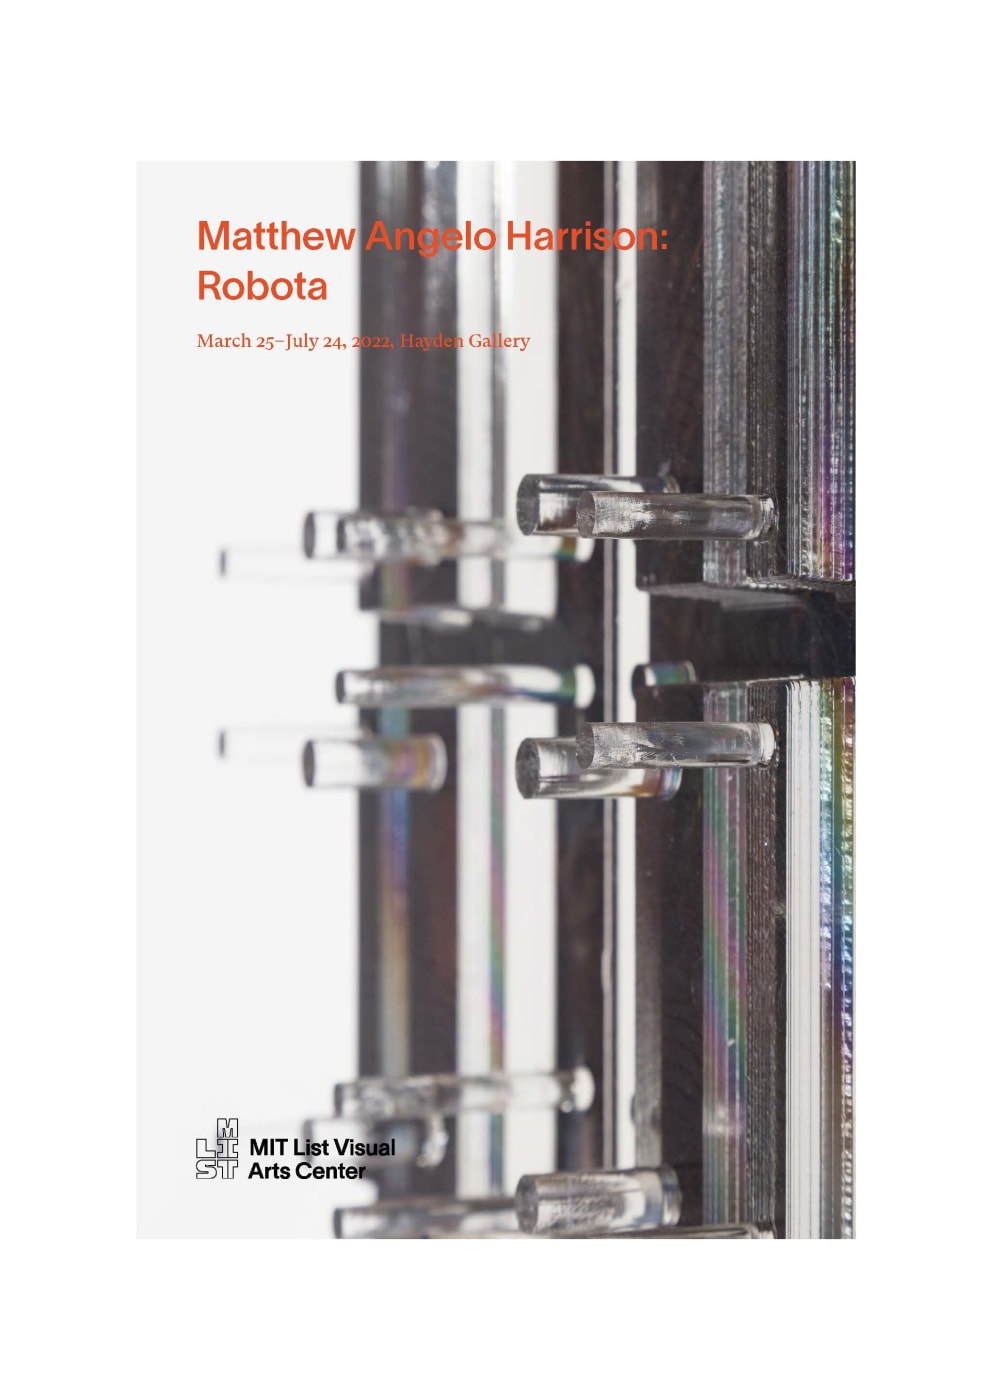 MATTHEW ANGELO HARRISON

ROBOTA

HAYDEN GALLERY

PUBLISHED BY MIT LIST VISUAL ARTS CENTER

2022

LINK